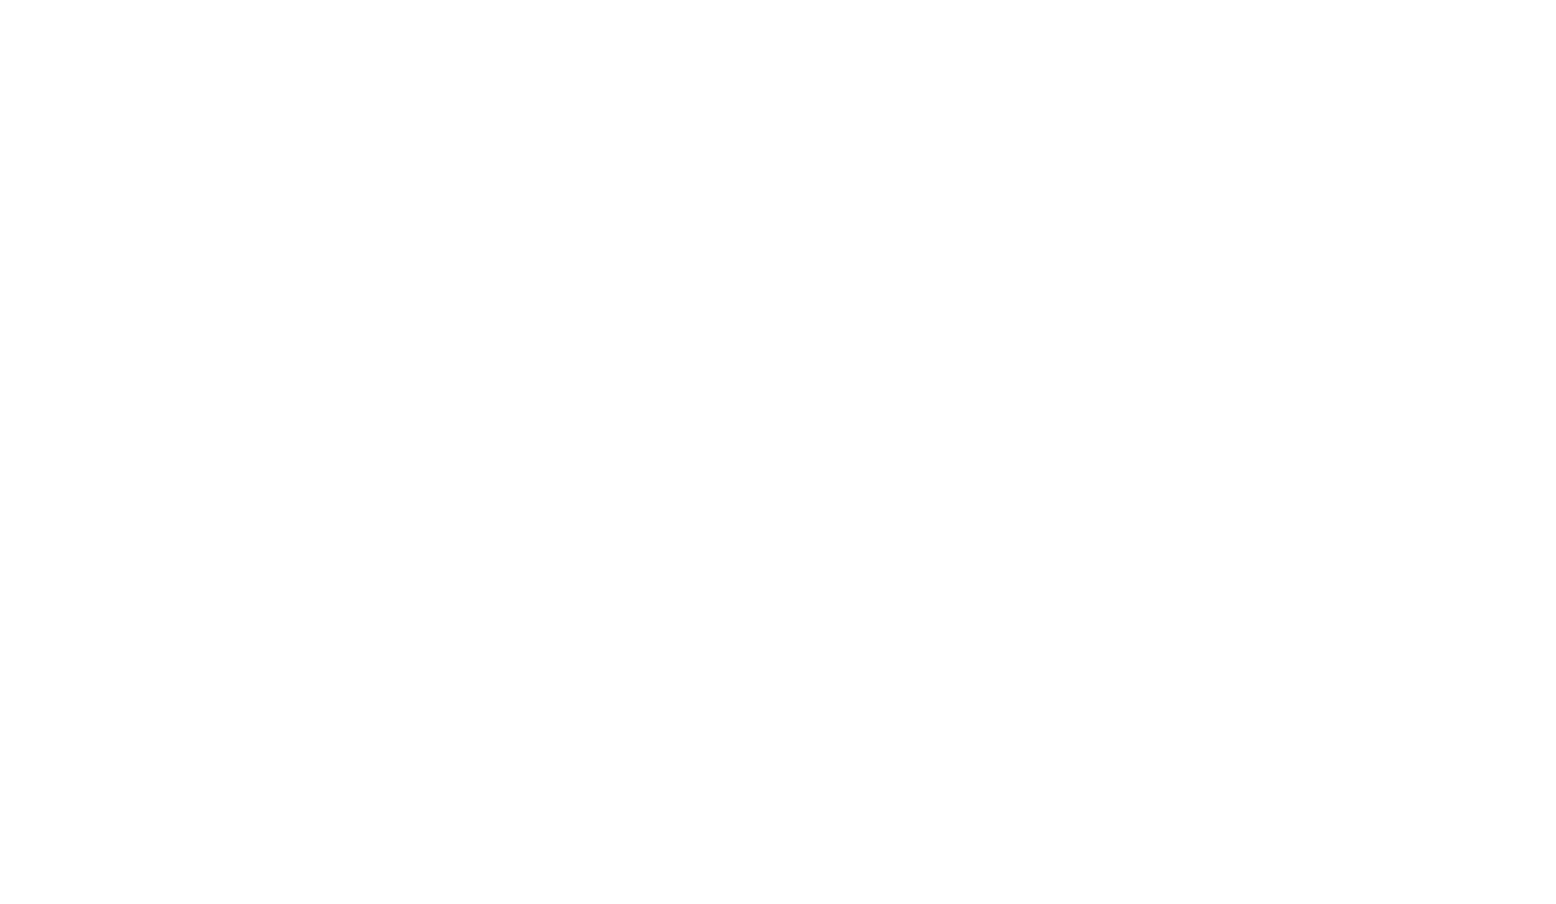 Sanmina logo large for dark backgrounds (transparent PNG)